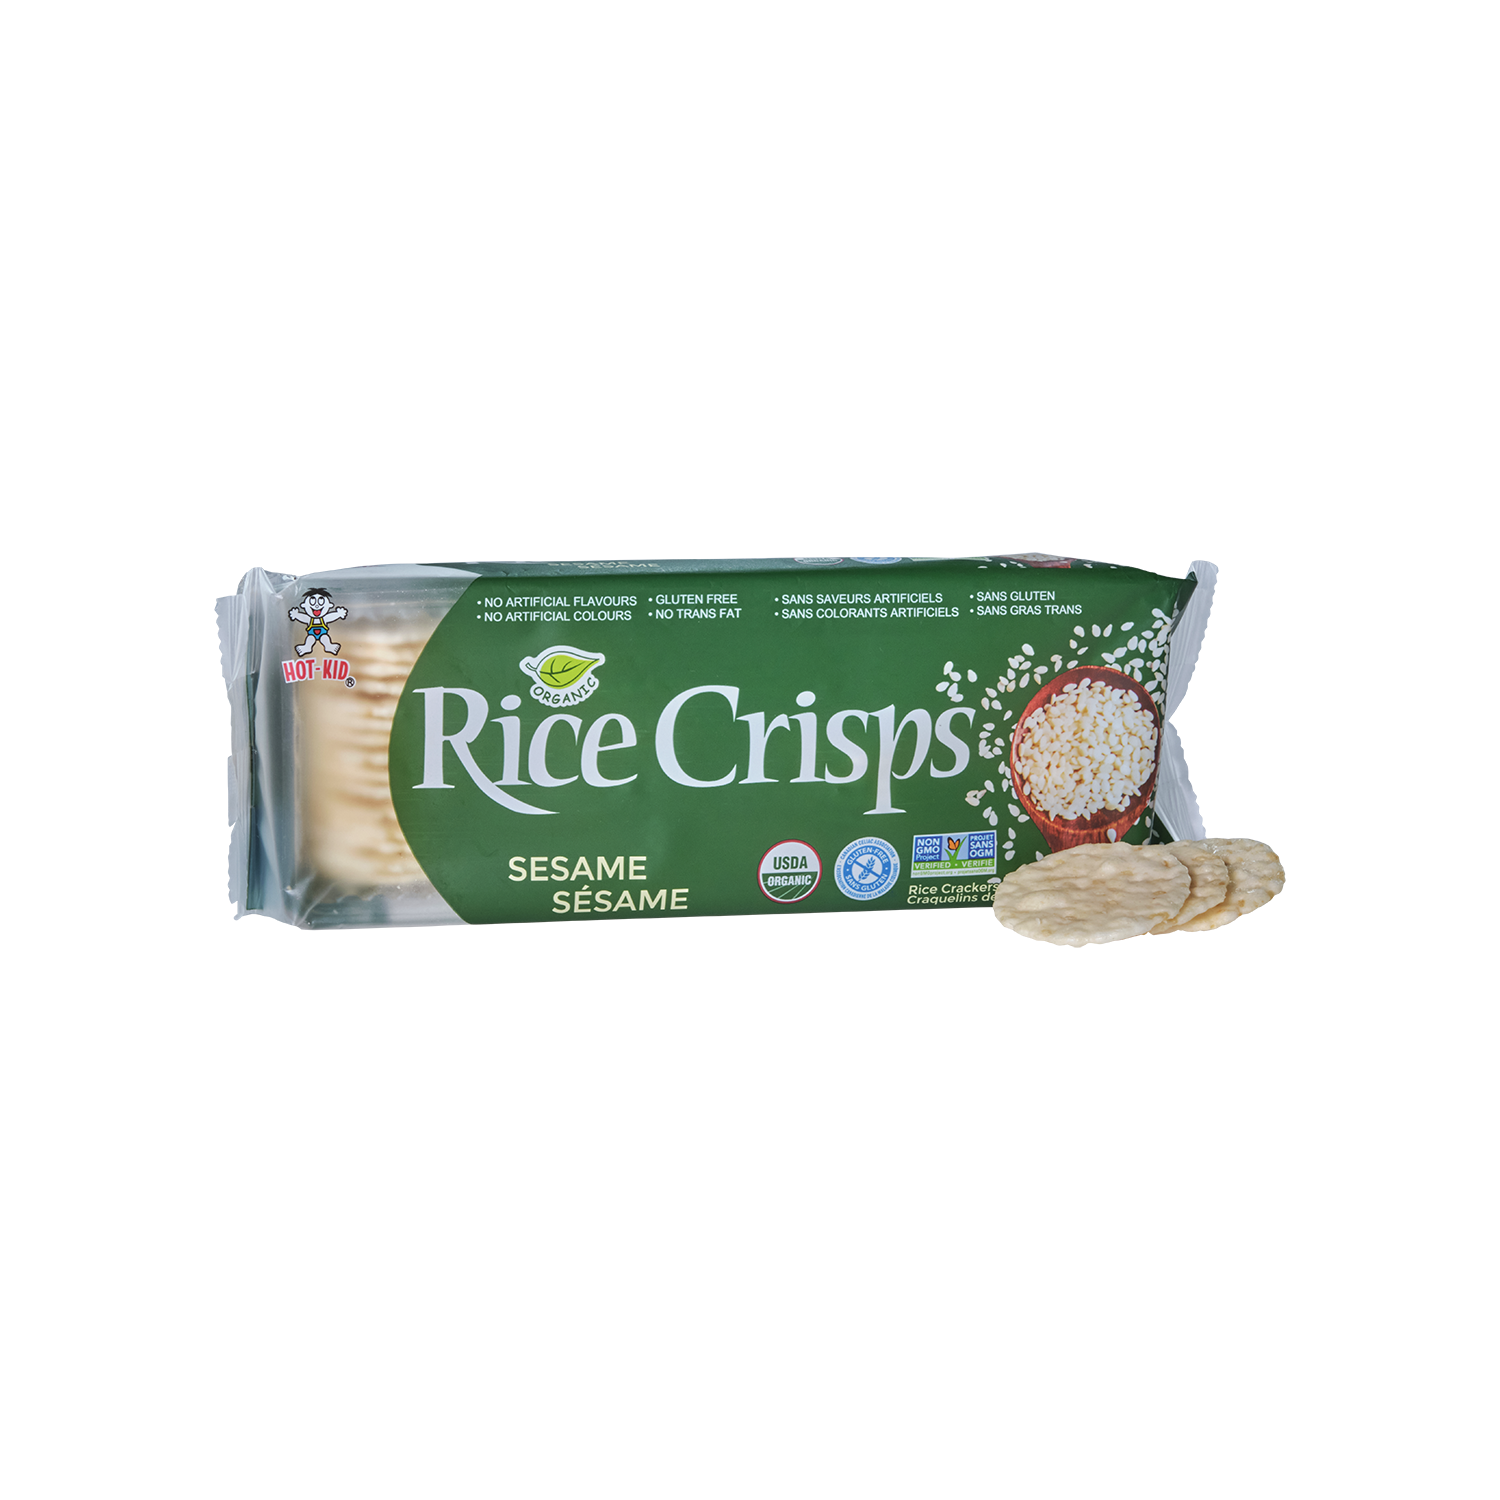 Organic Rice Crisps Sesame - Gold Quality Award 2023 from Monde Selection